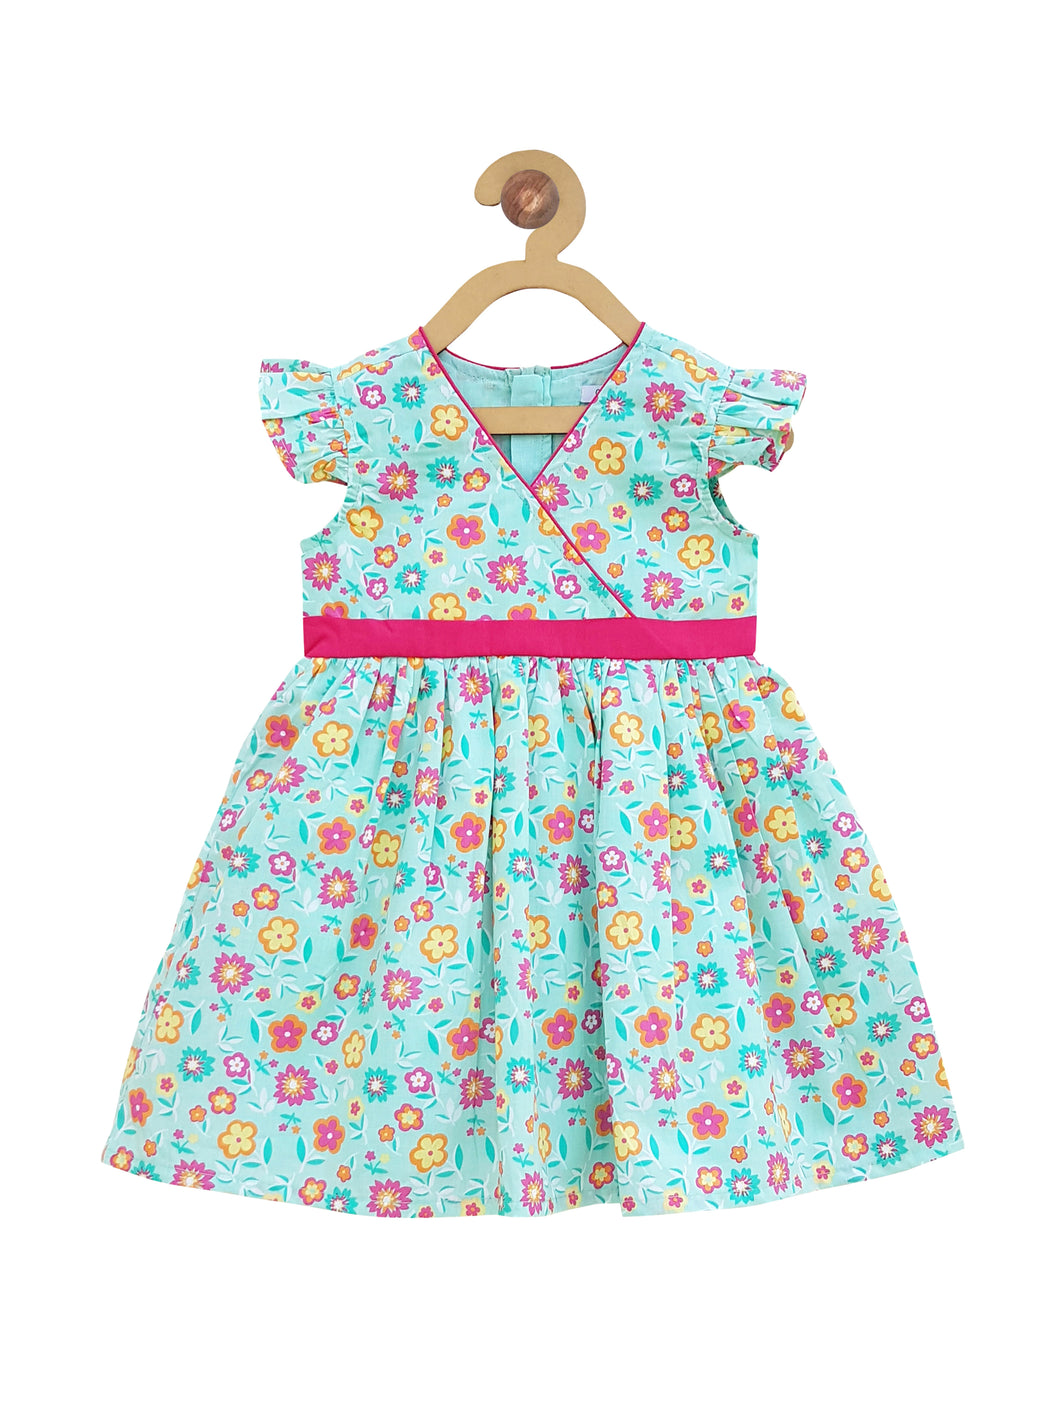 Campana Girls Floral Print Crossover Dress - Sea Green (CK30603), Blue Dress, Pink Print Dress, Print Dress, Summer Dress, Frock